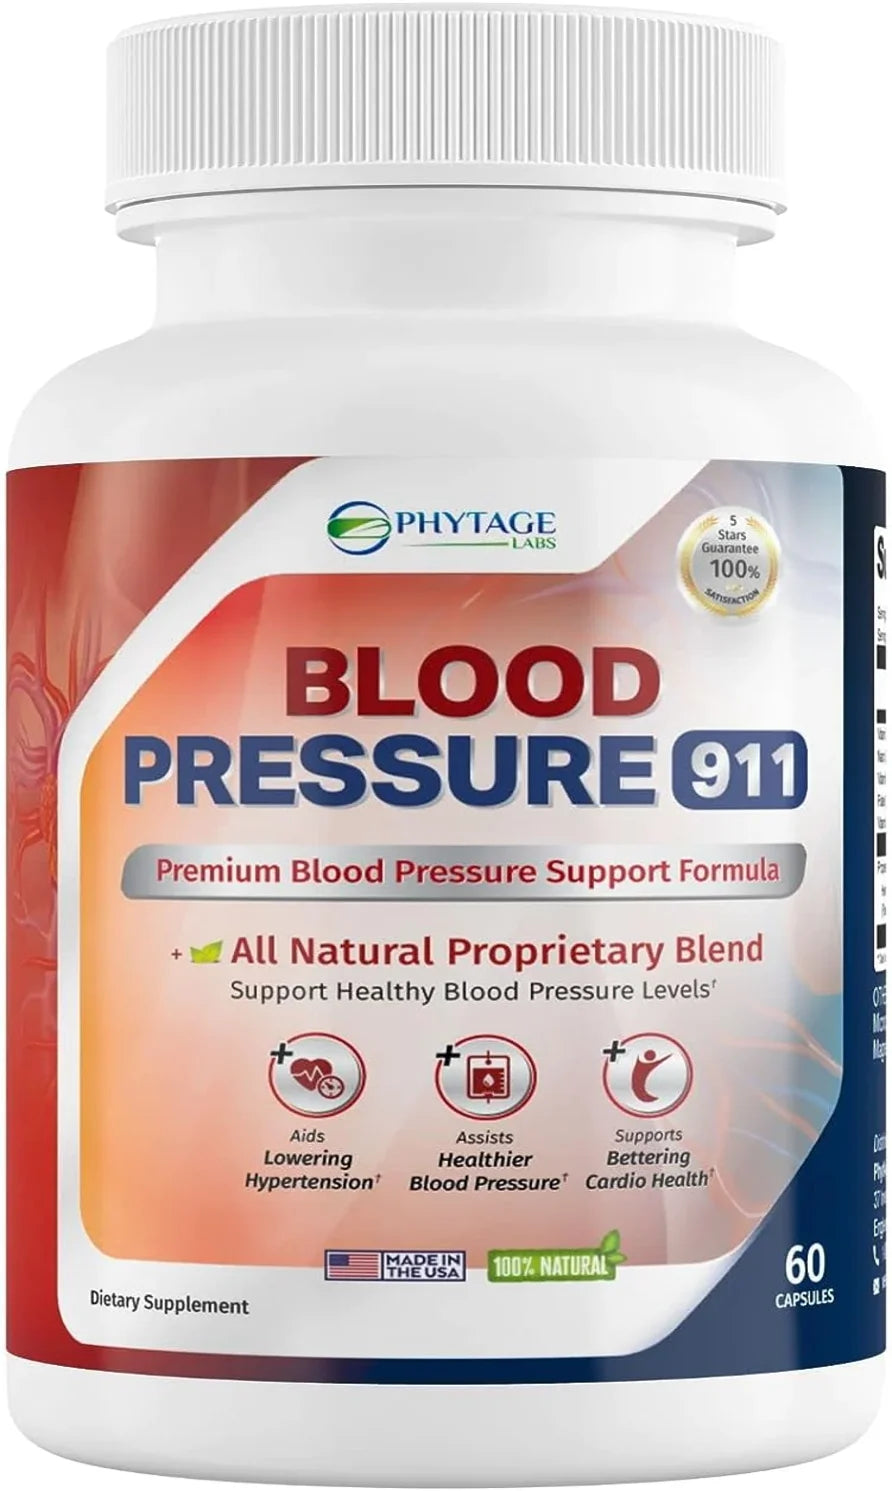 Blood Pressure Wellness 911